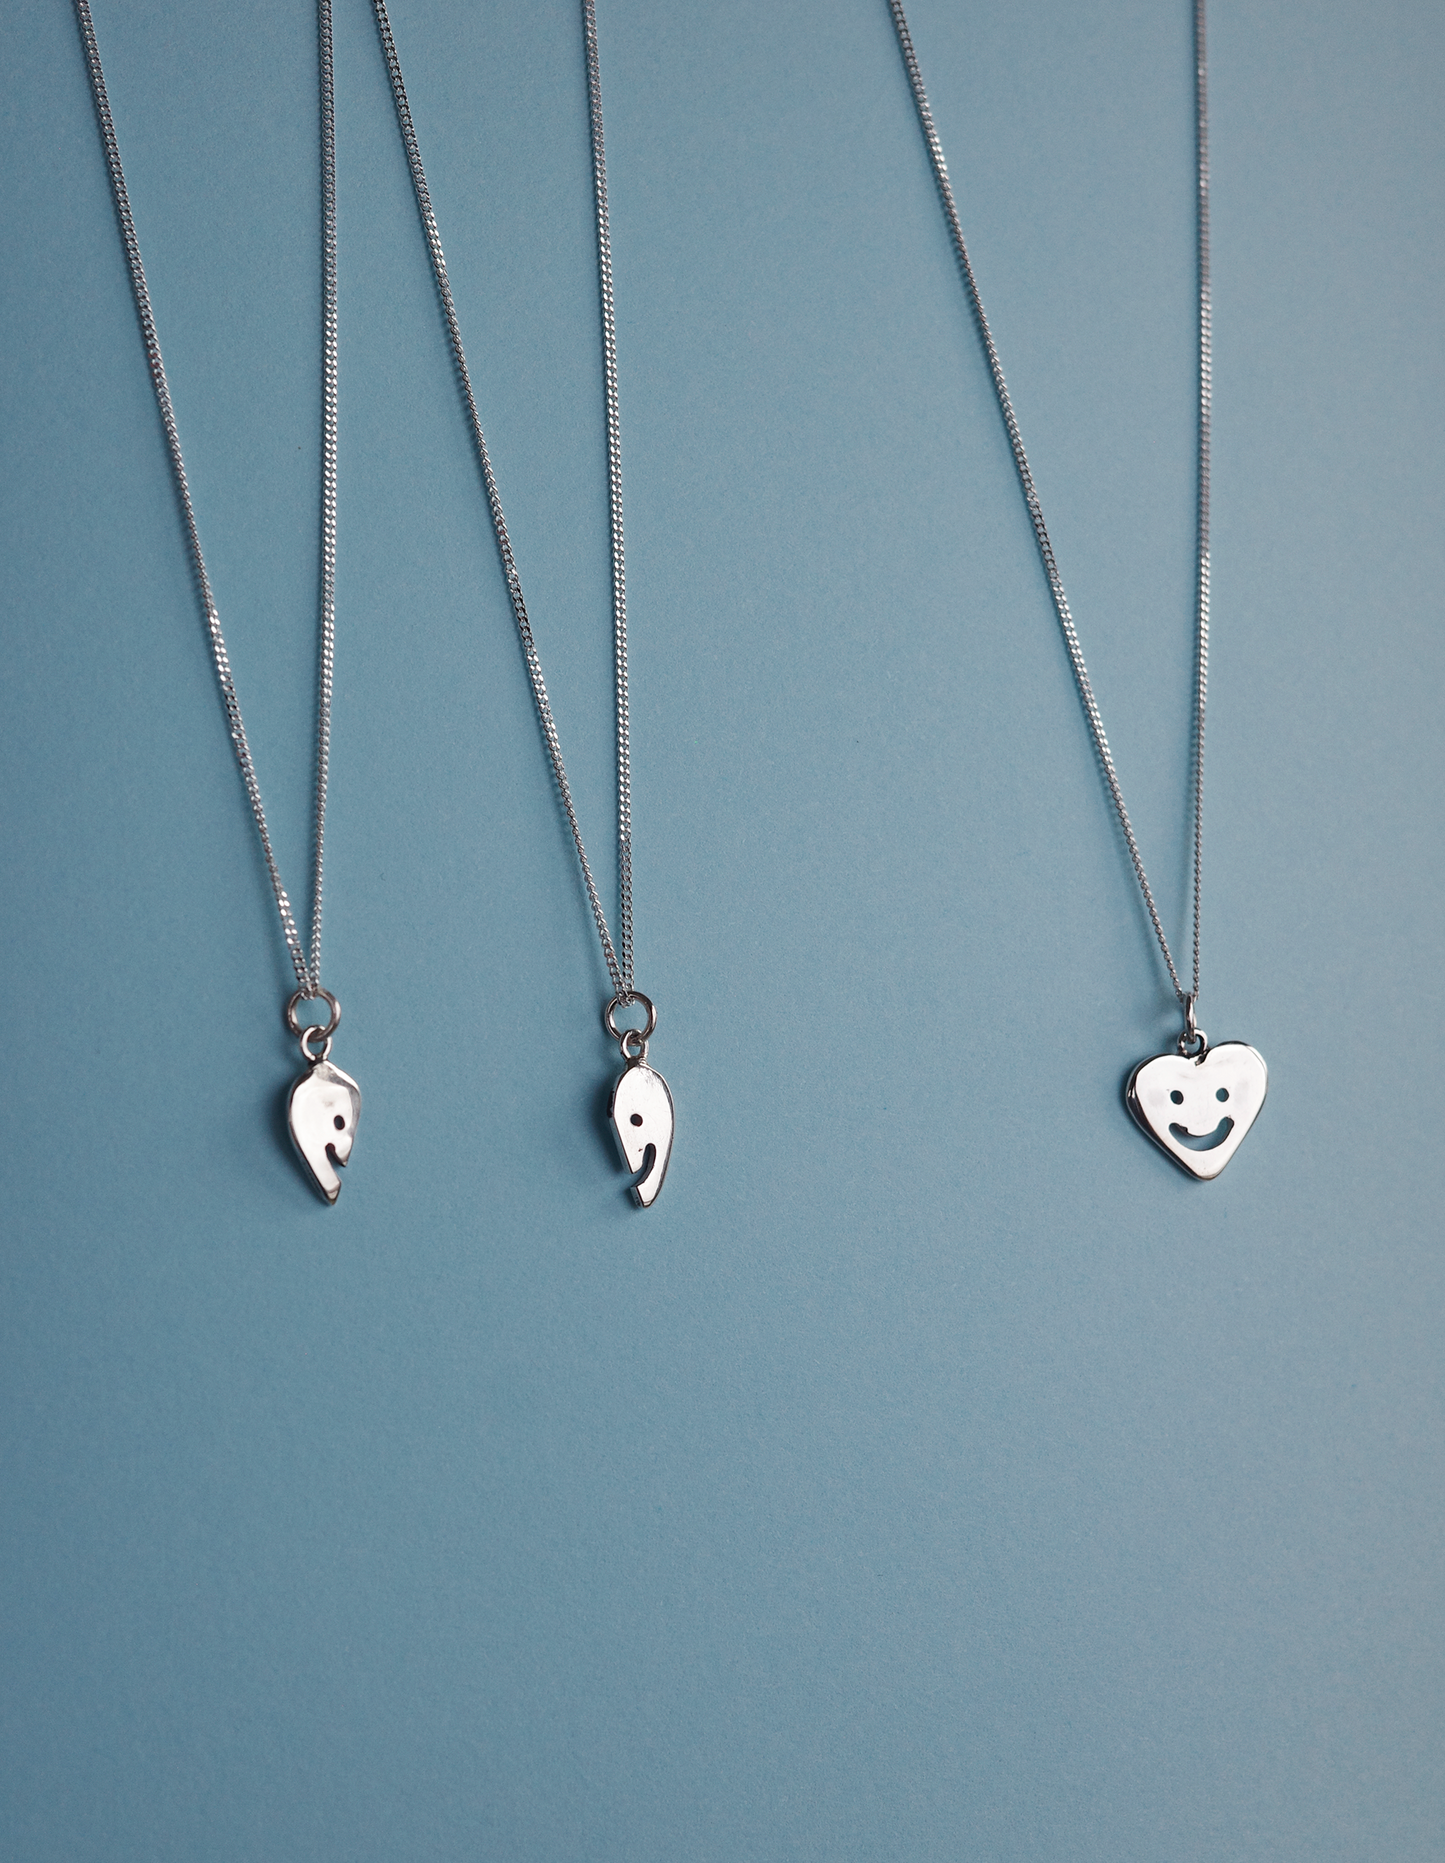 Best Friends / Lovers Heart Halves - Handmade Silver Pendants